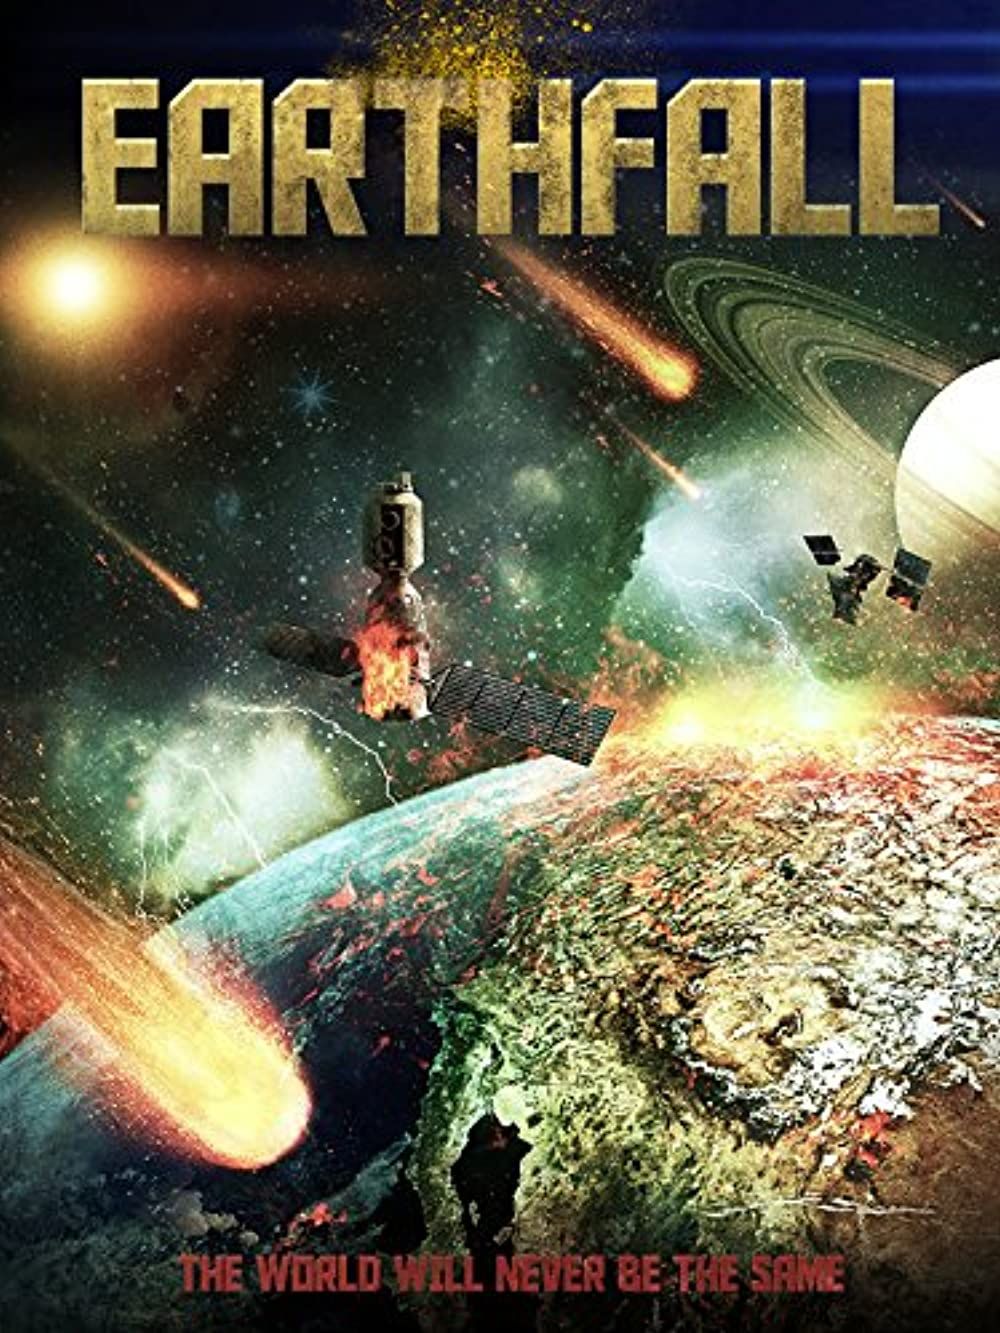 Earthfall (2015) Hindi Dubbed BluRay download full movie